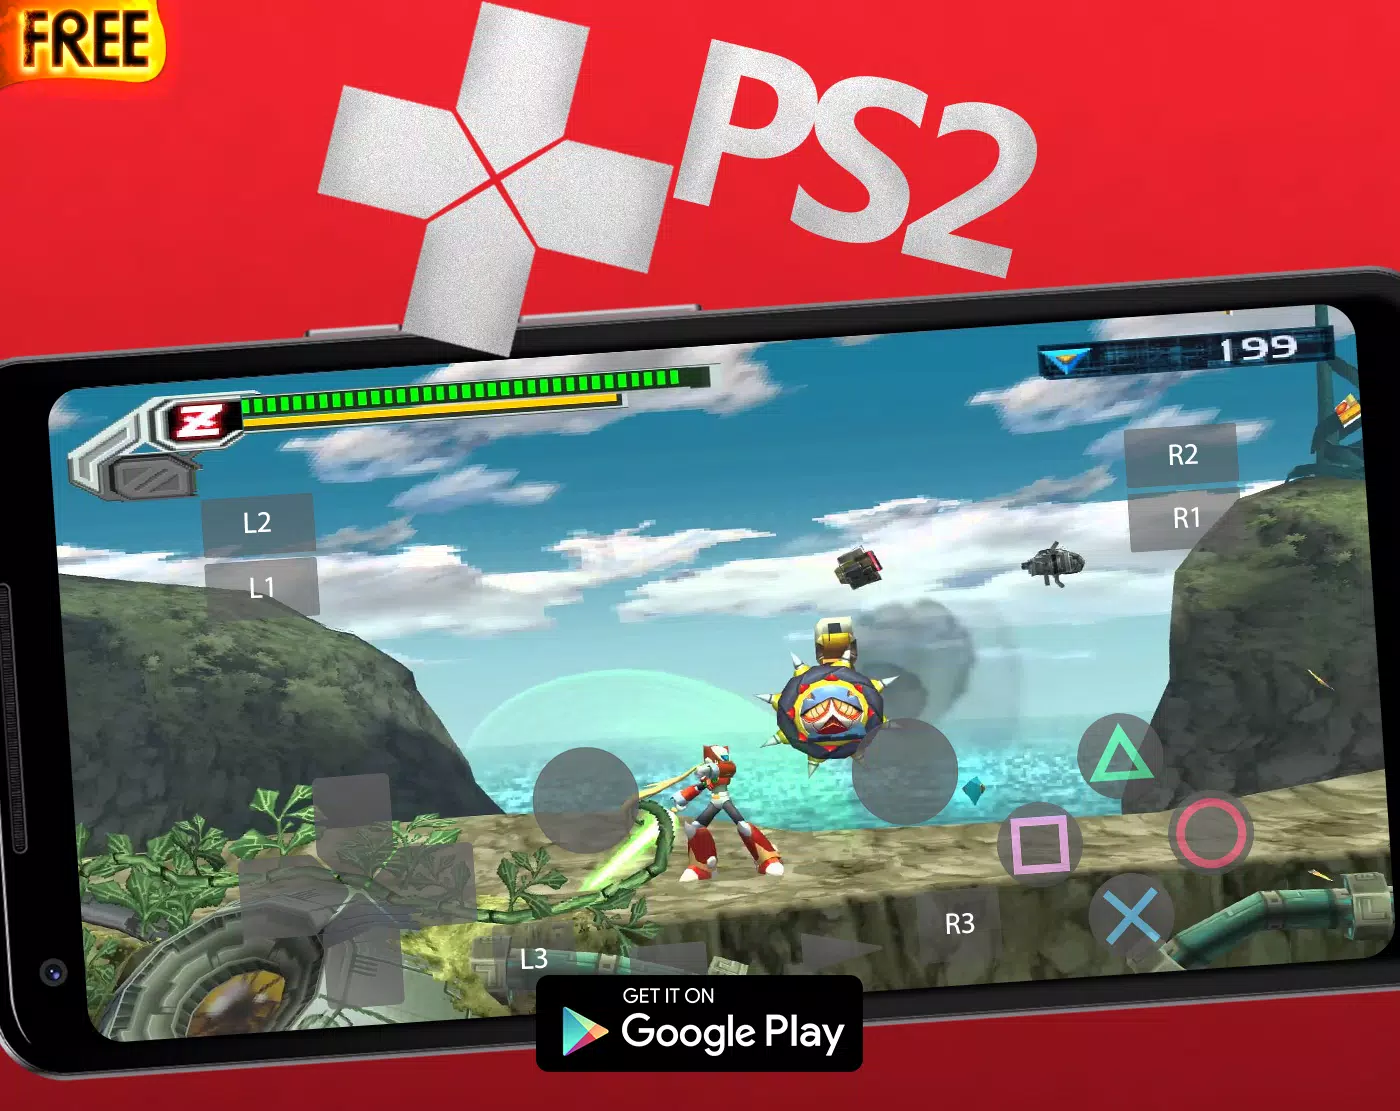 Red PS2 Emulator - PRO PlayStation 2 Emulator for Android - APK Download